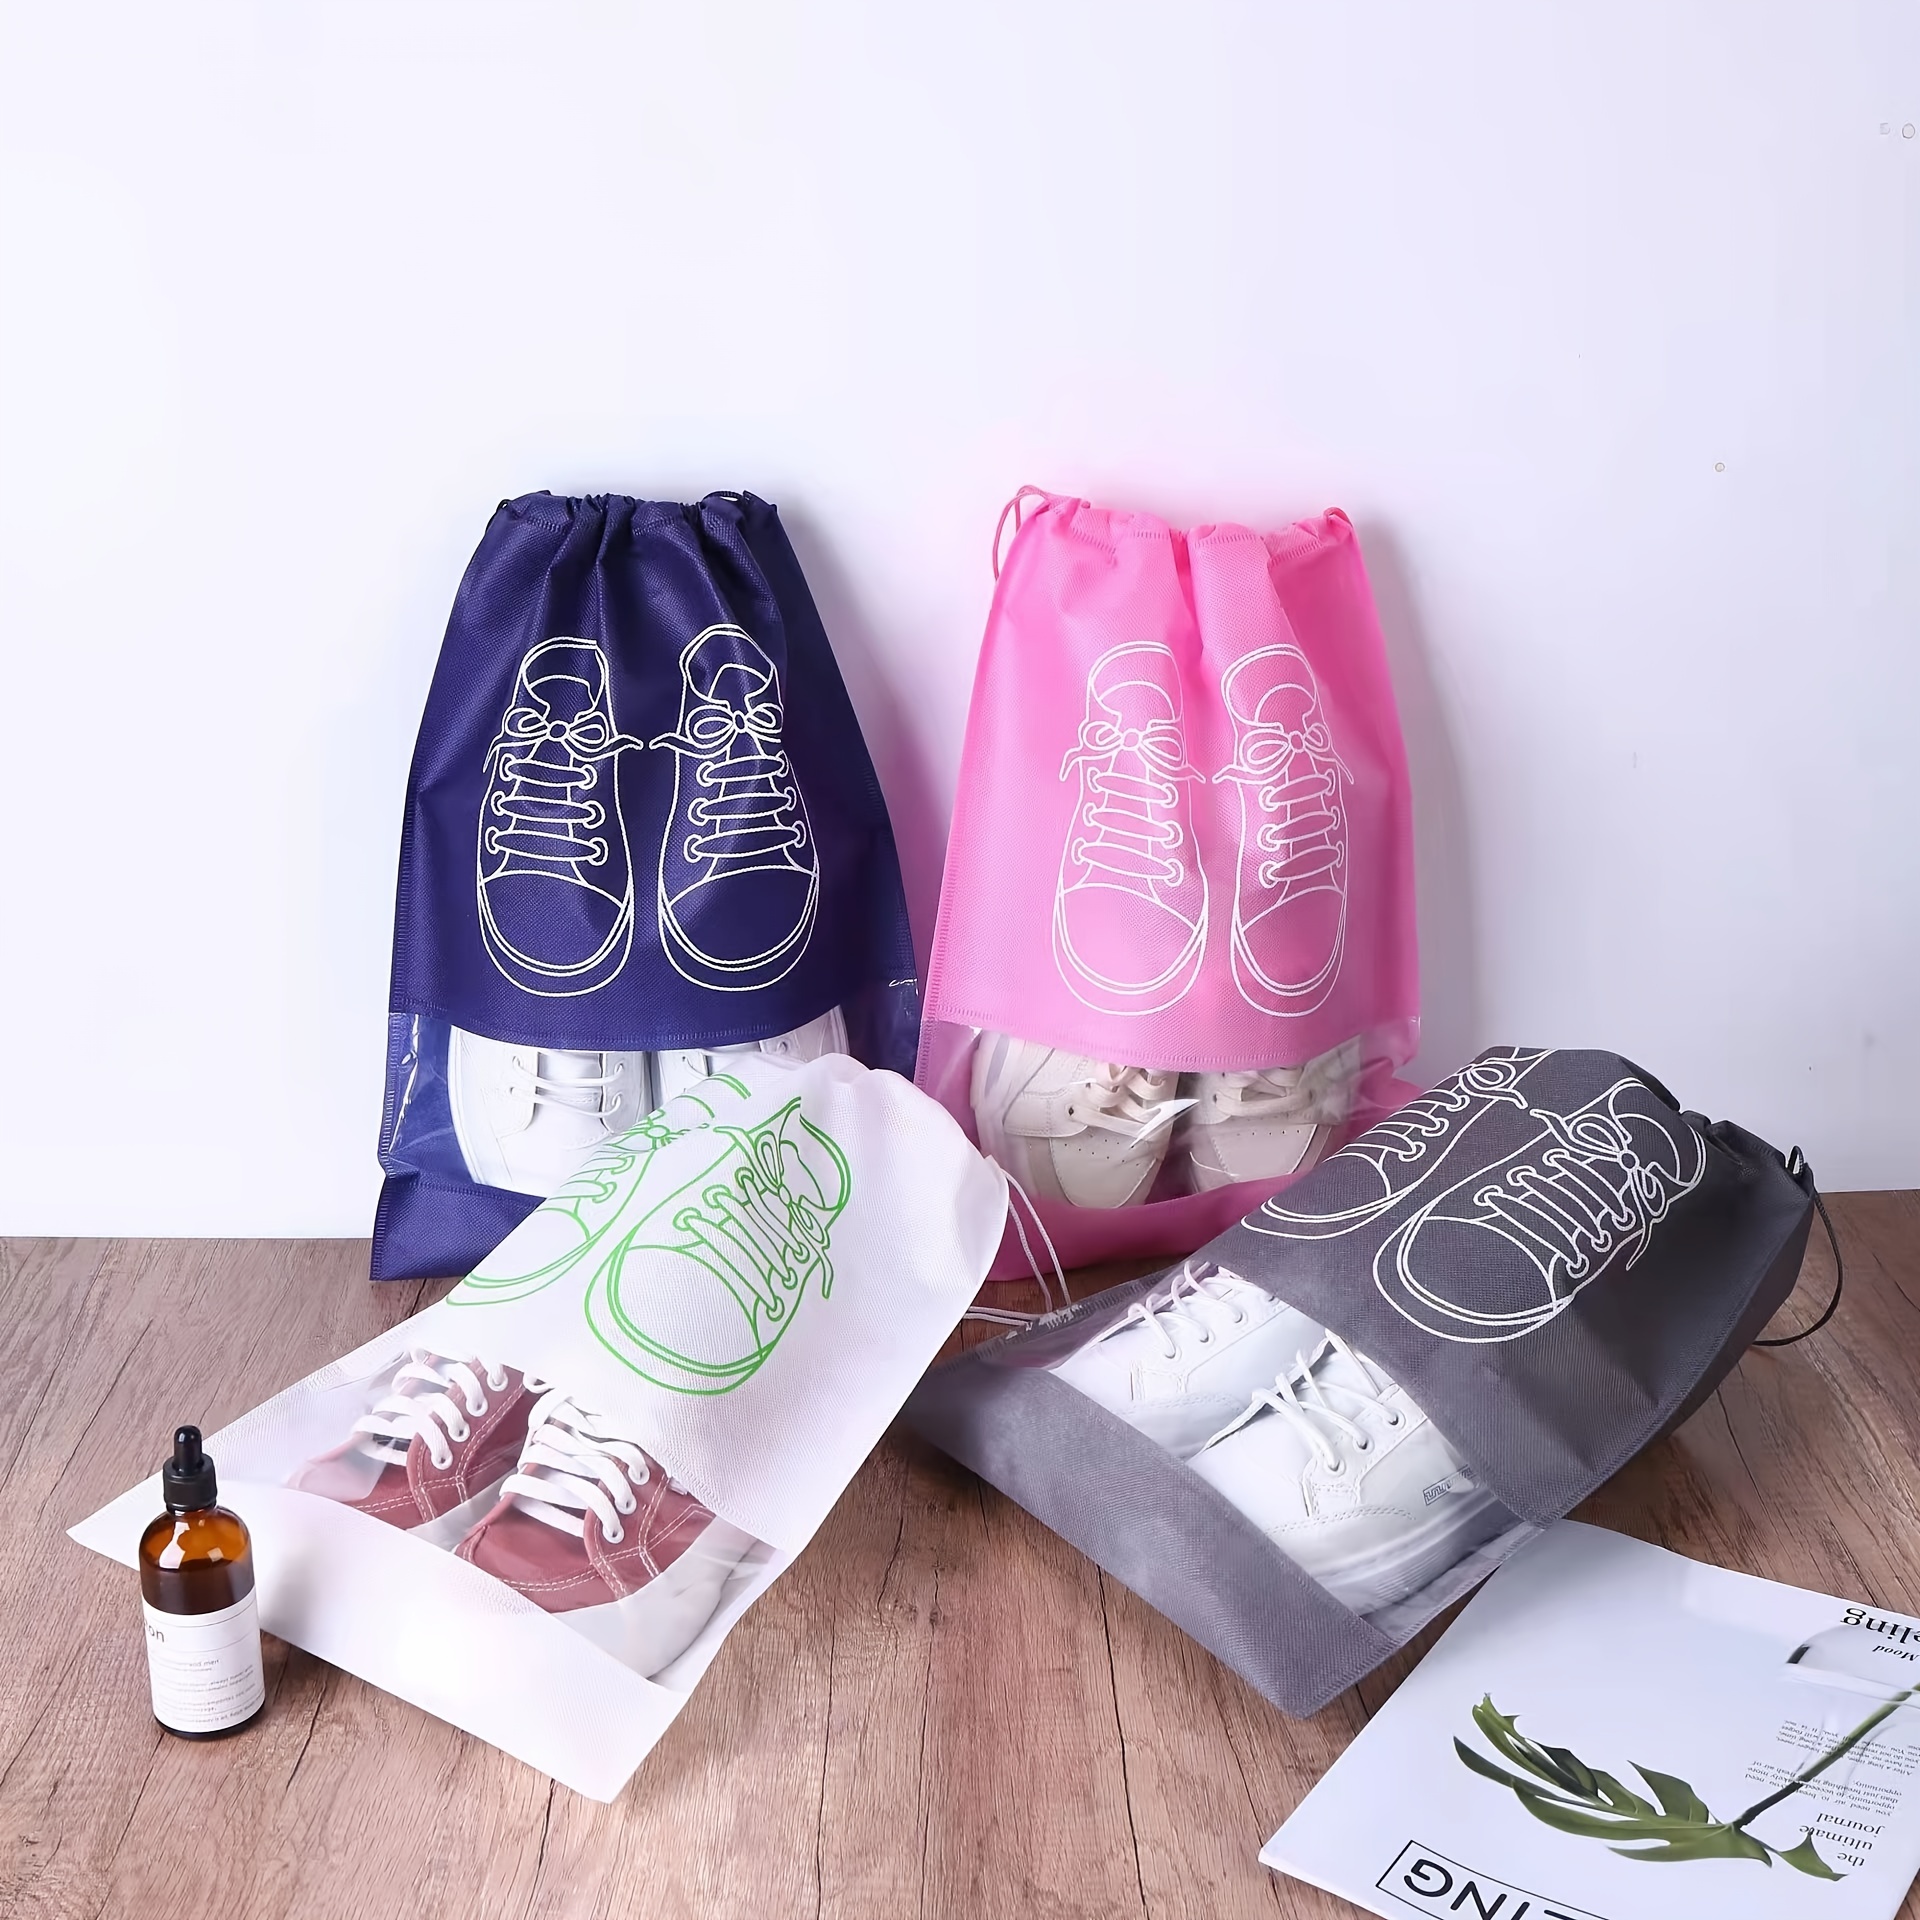 1pc Non-woven Fabric Shoe Storage Bag, Modern Drawstring Travel